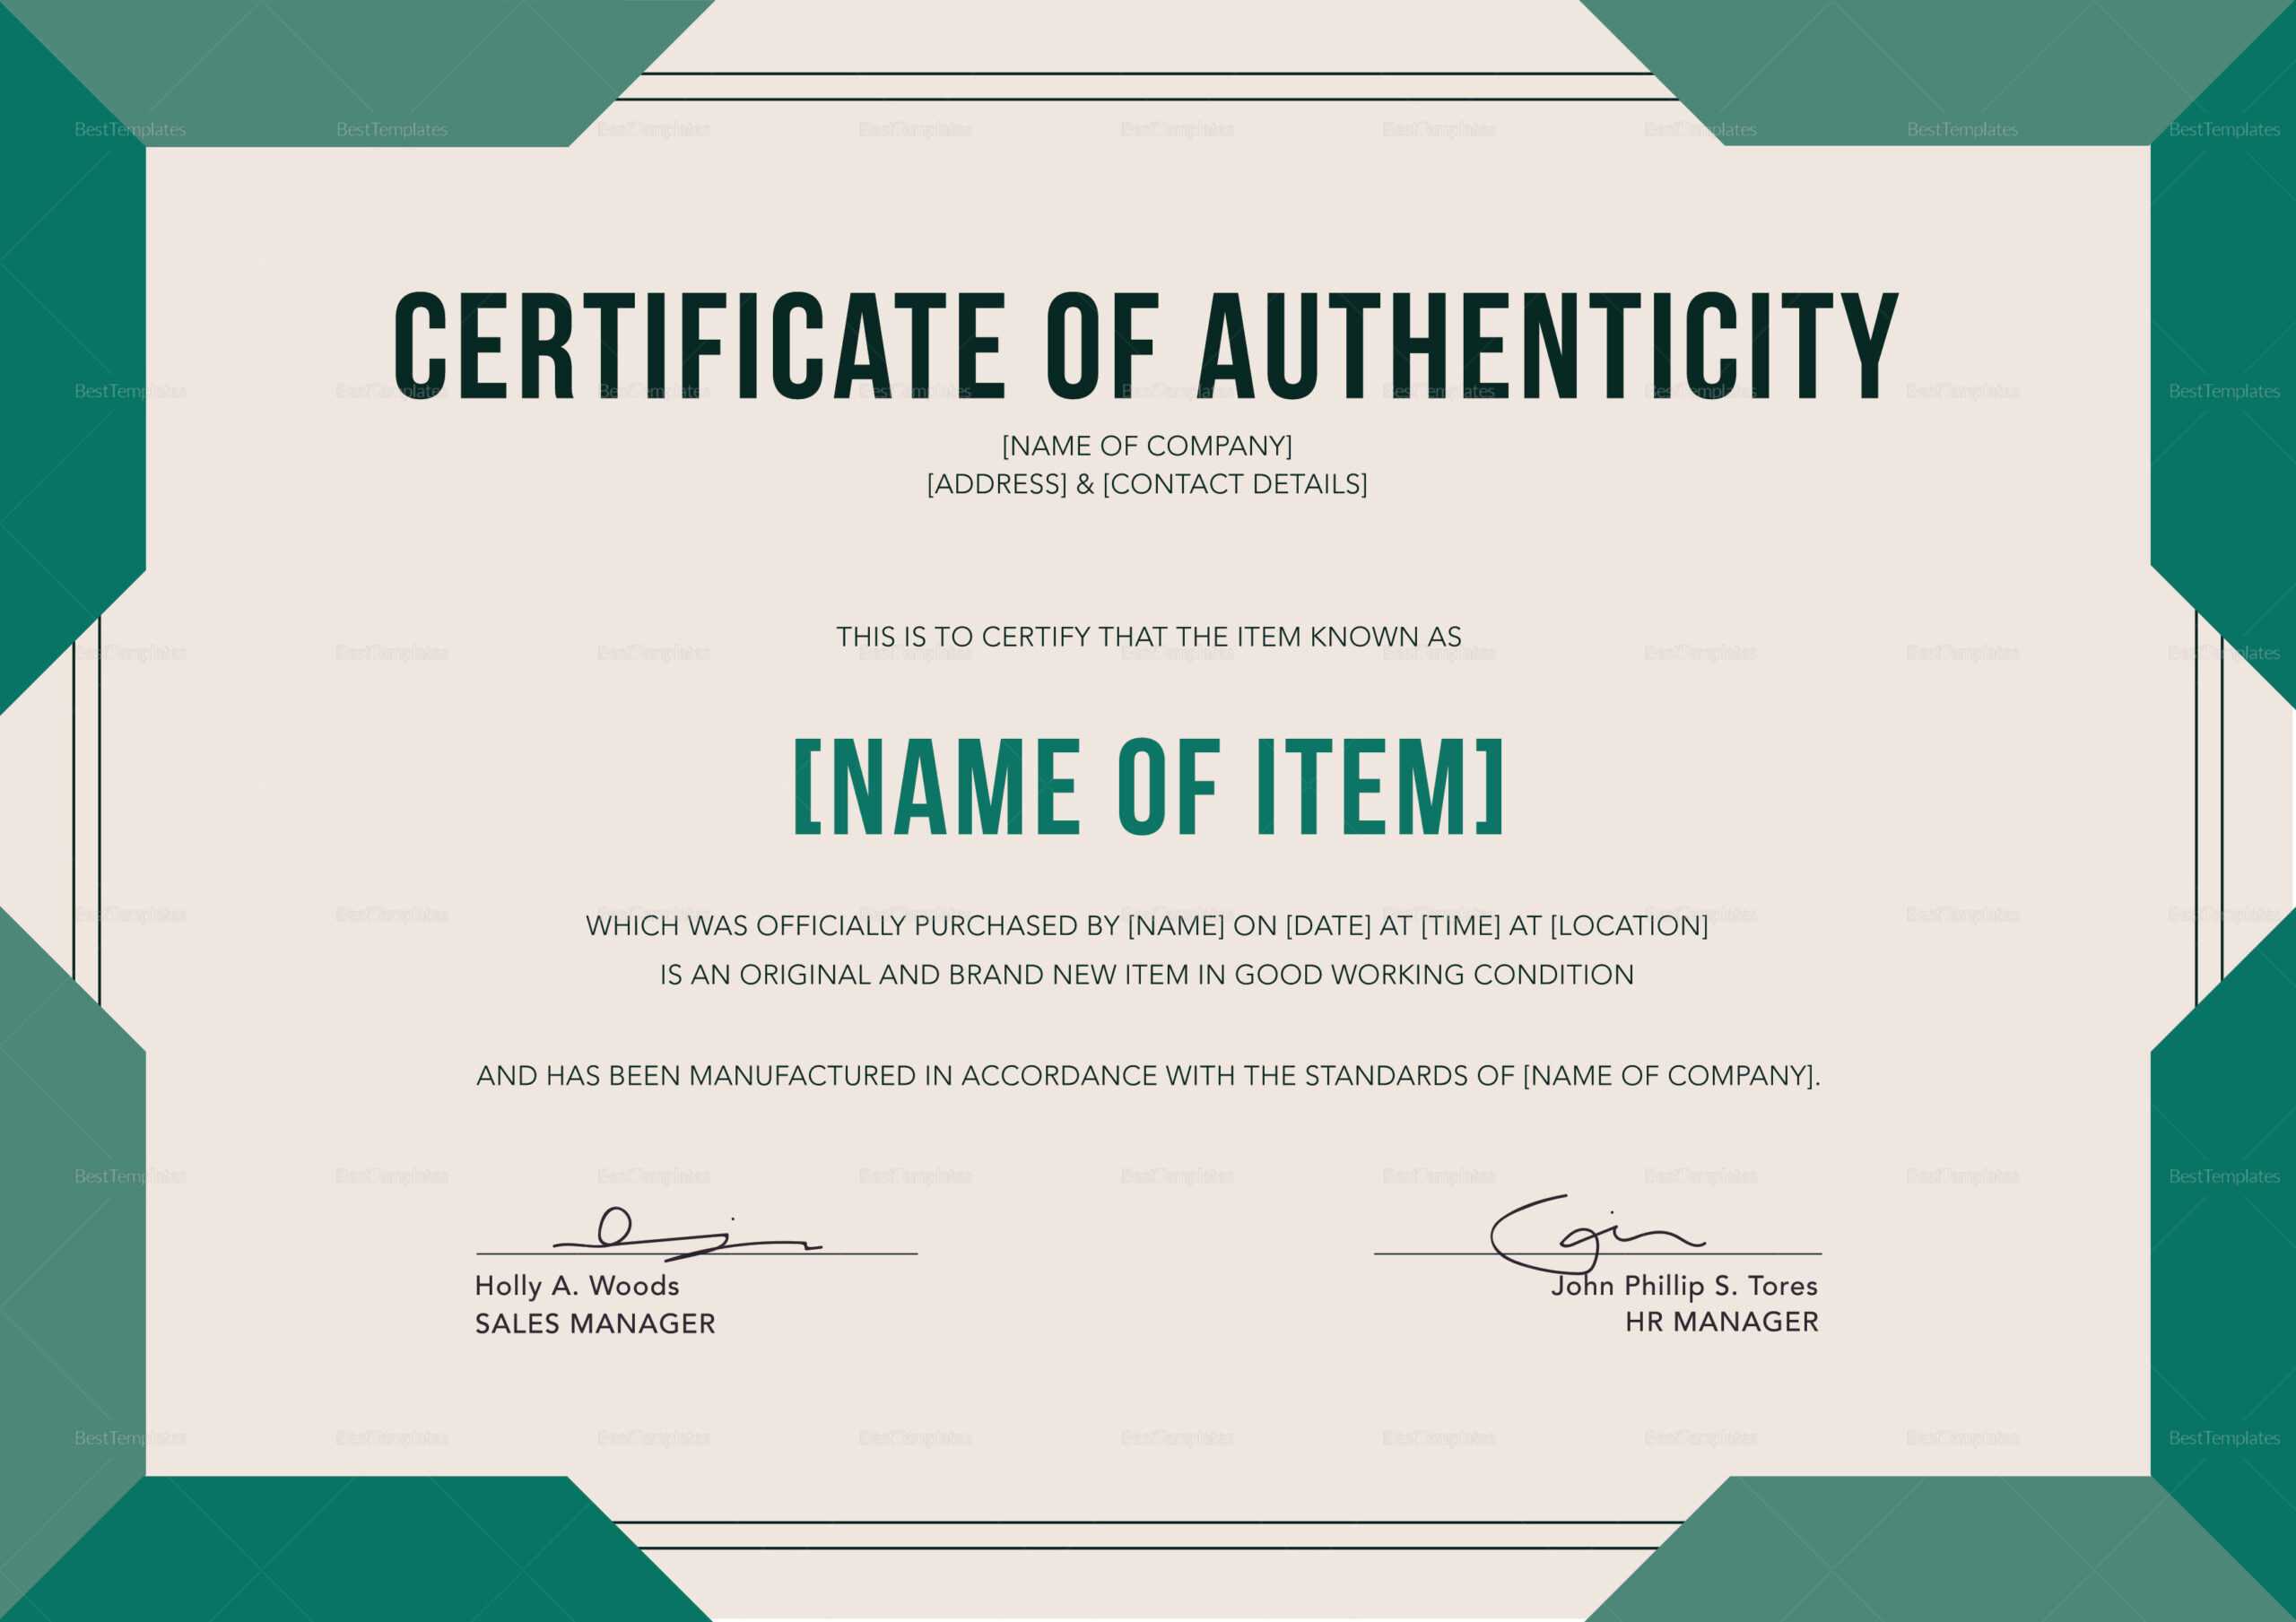 Elegant Certificate Of Authenticity Template Regarding Certificate Of Authenticity Template